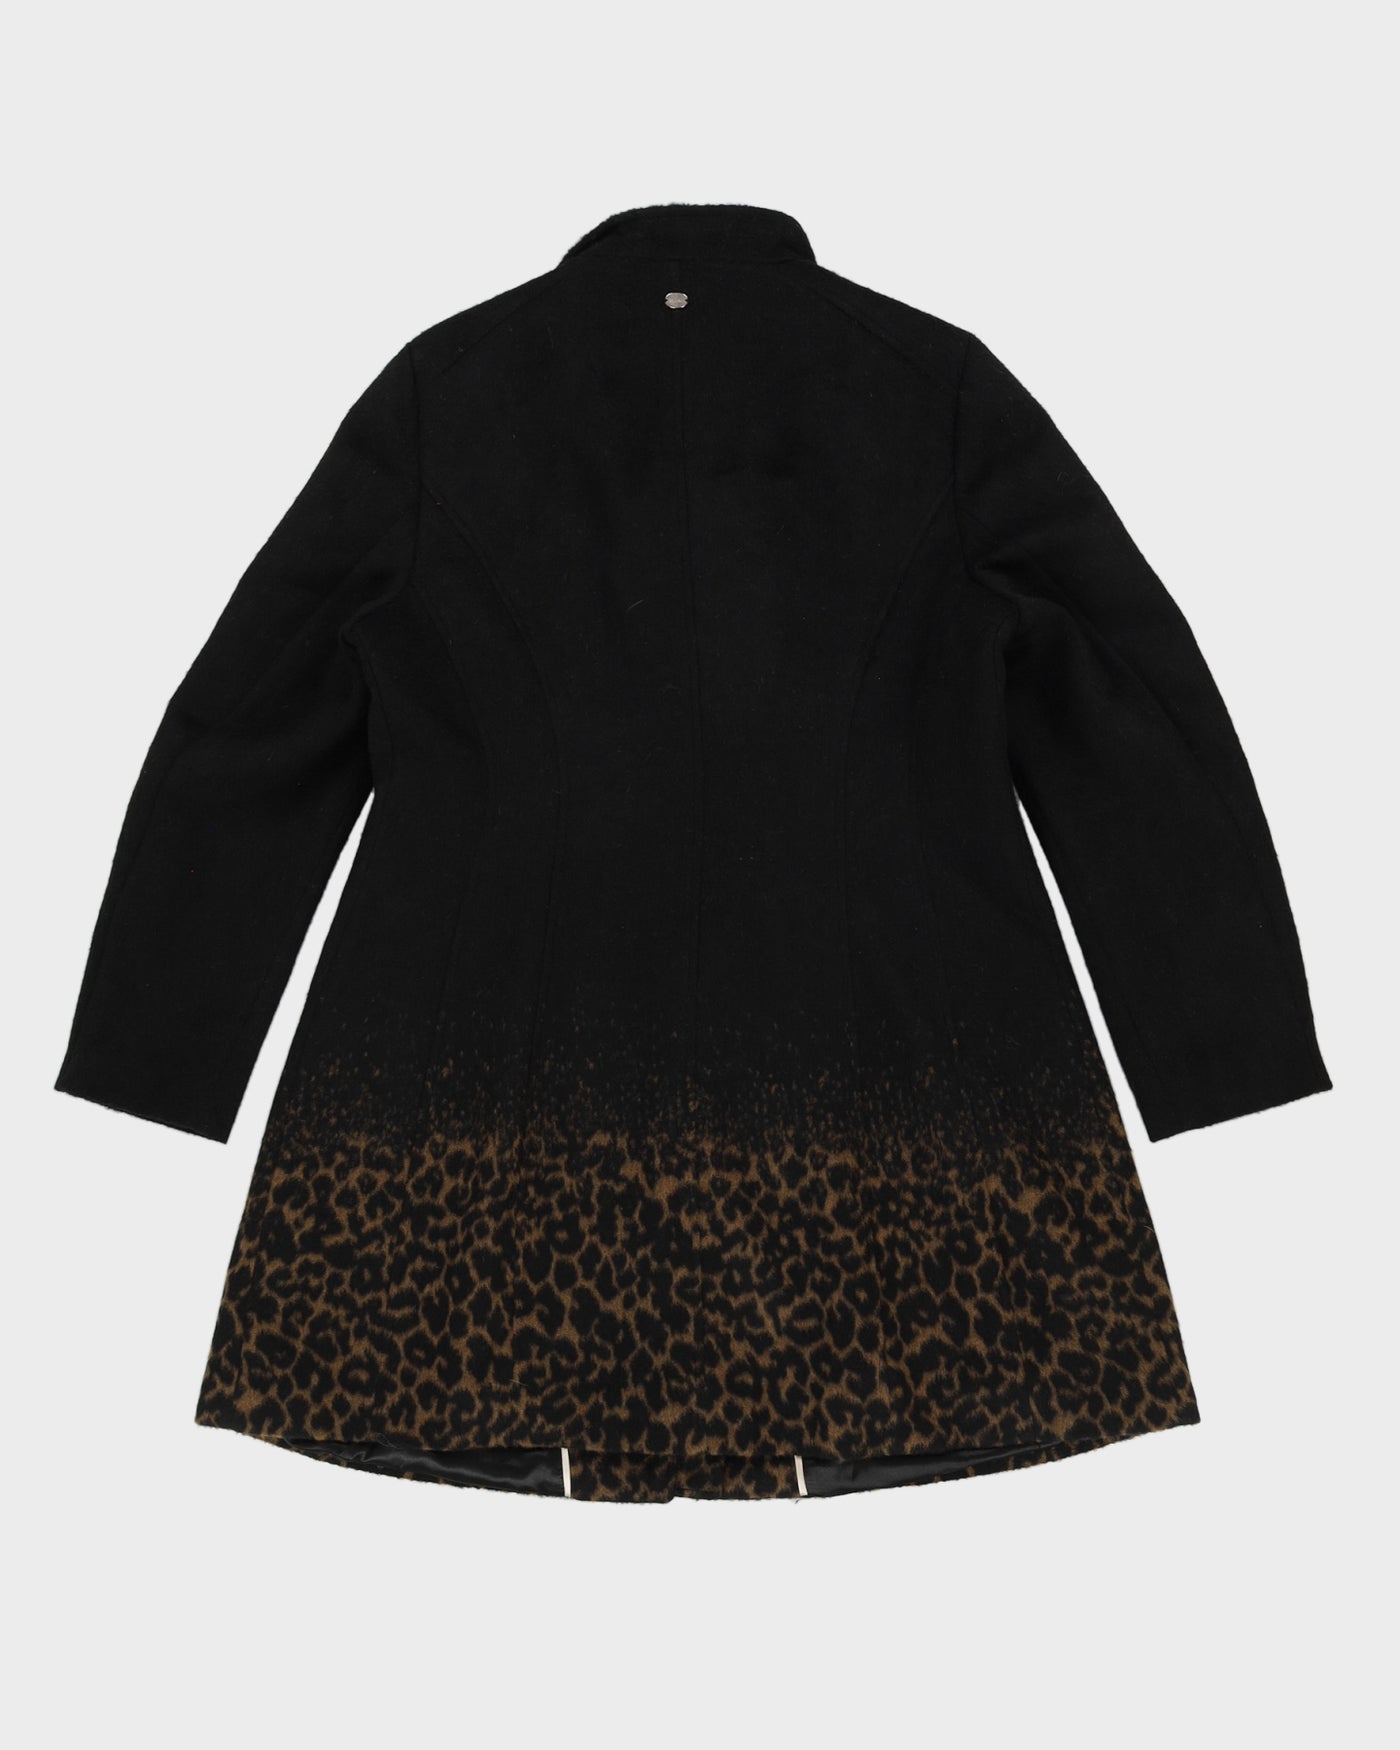 Calvin Klein Black With Brown Pattern Overcoat - M